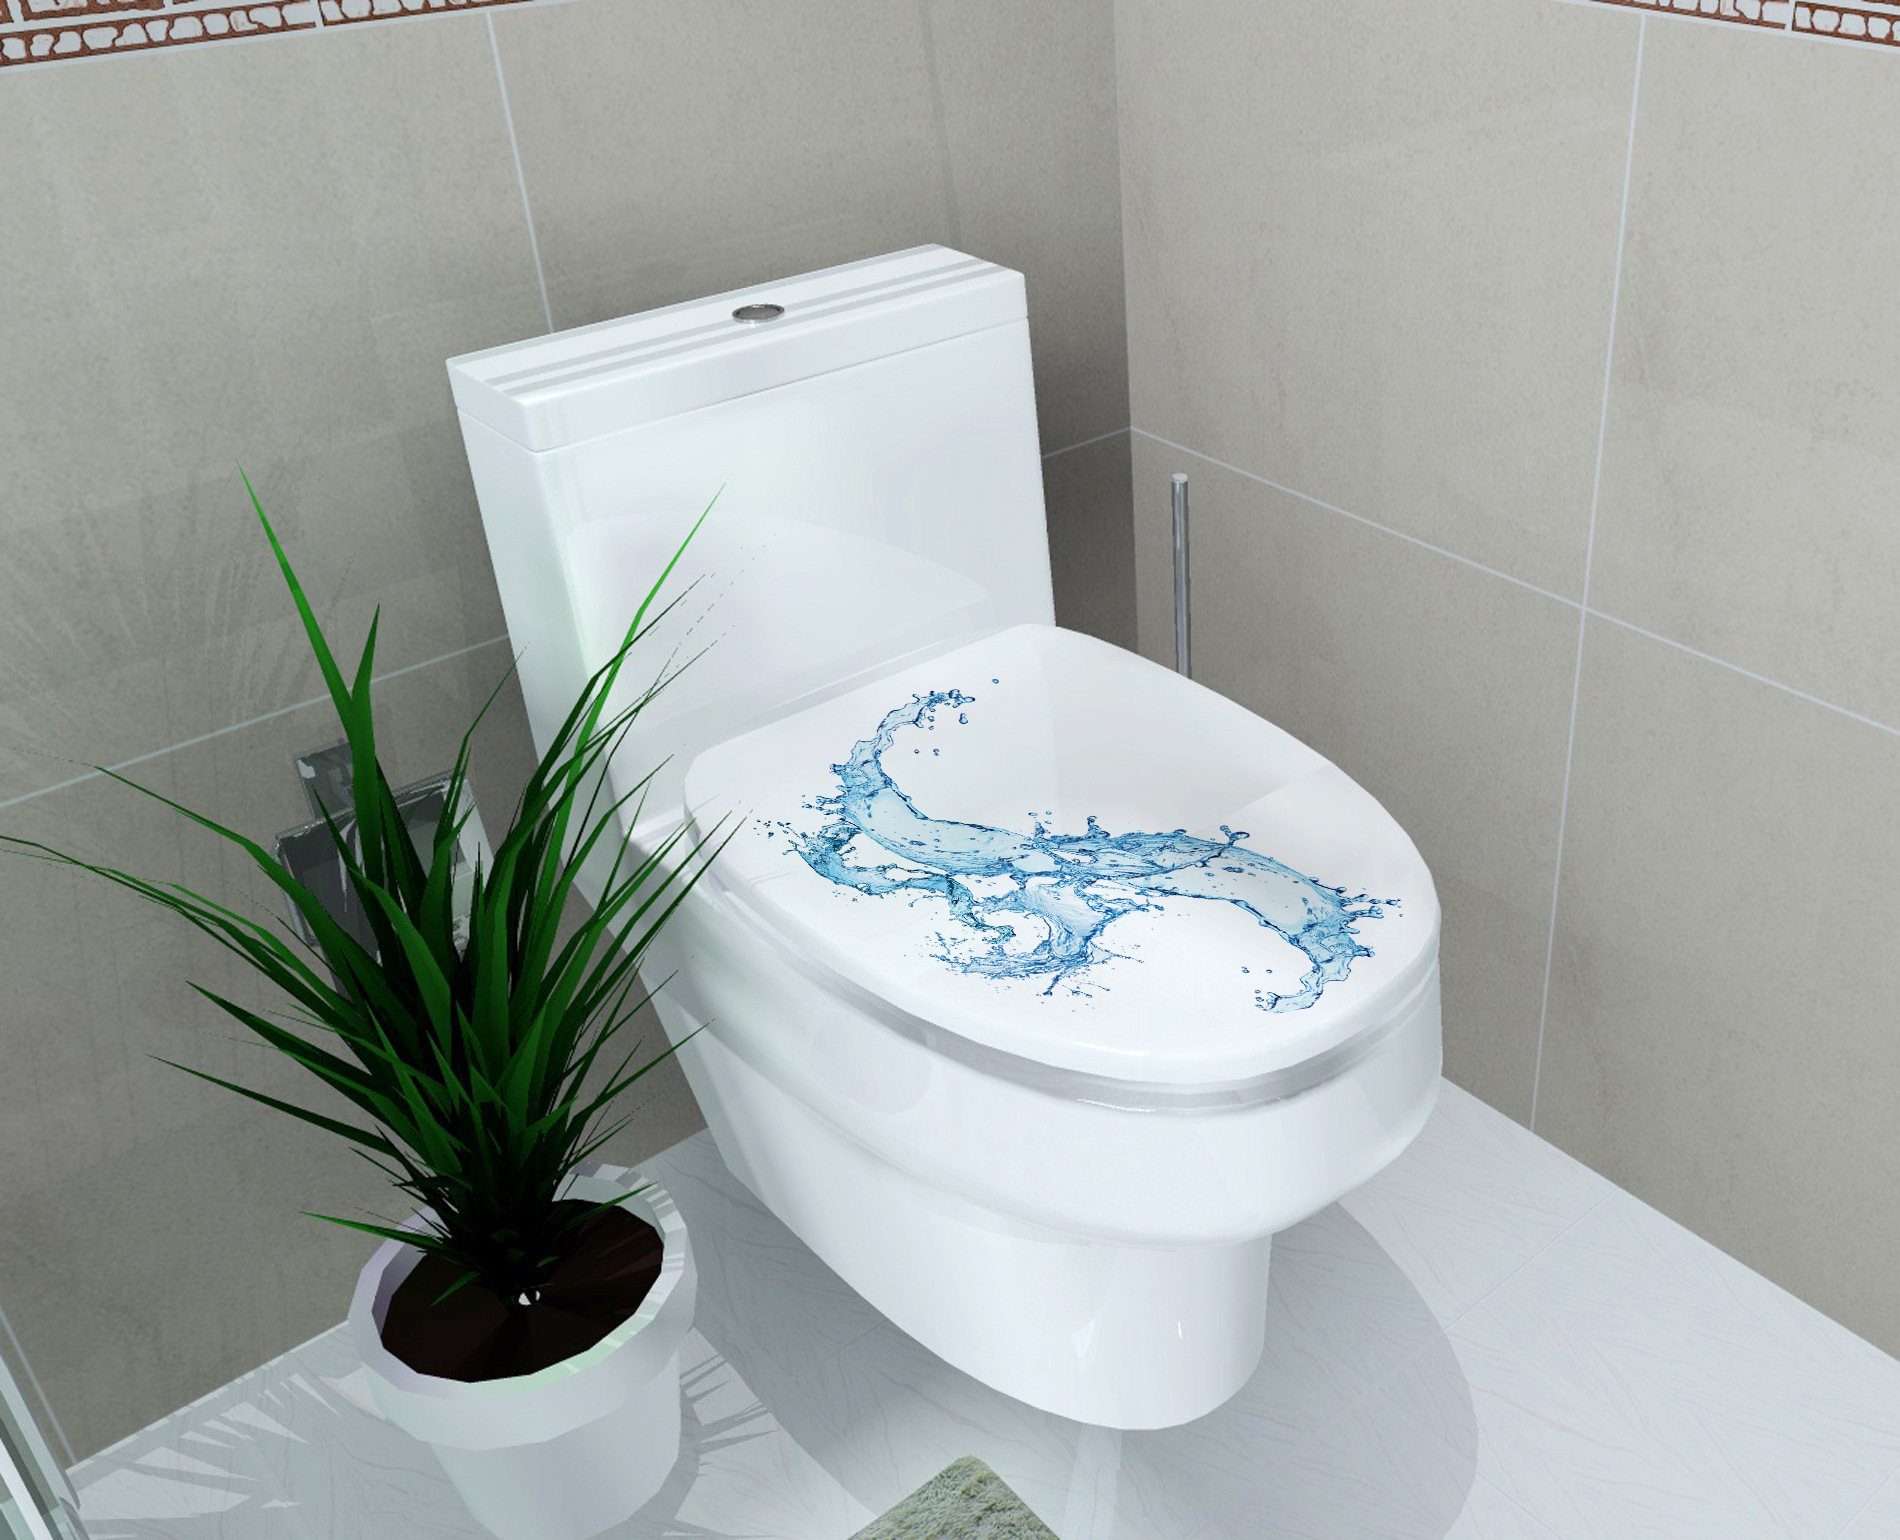 Creative-3D-Toilet-Seat-Wall-Sticker-Art-Wallpaper-Removable-Bathroom-Decals-Home-Decor-1299895-5